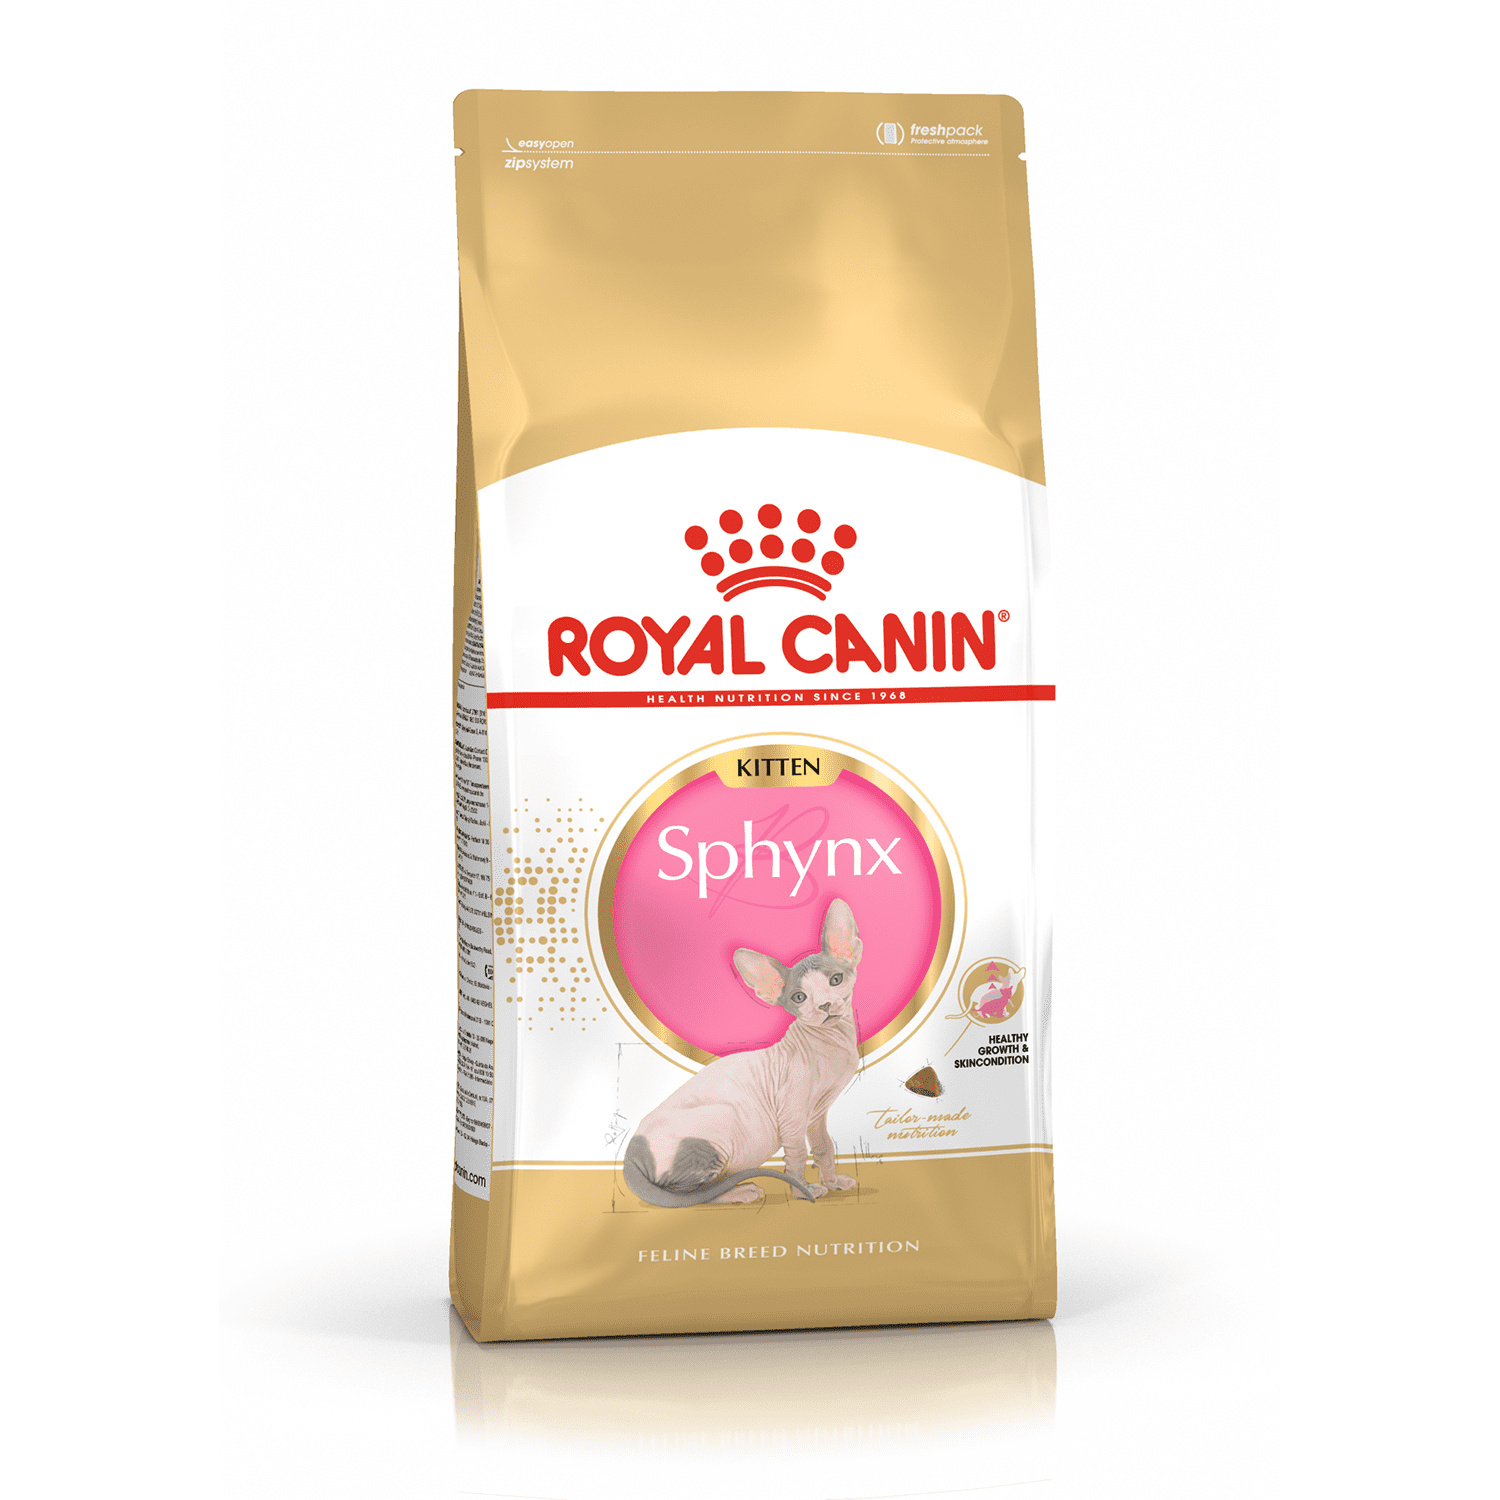 Royal Canin Корм Royal Canin для котят породы сфинкс: от 4 месяцев до 1 года (2 кг) royal canin корм royal canin для котят породы сфинкс от 4 месяцев до 1 года 2 кг